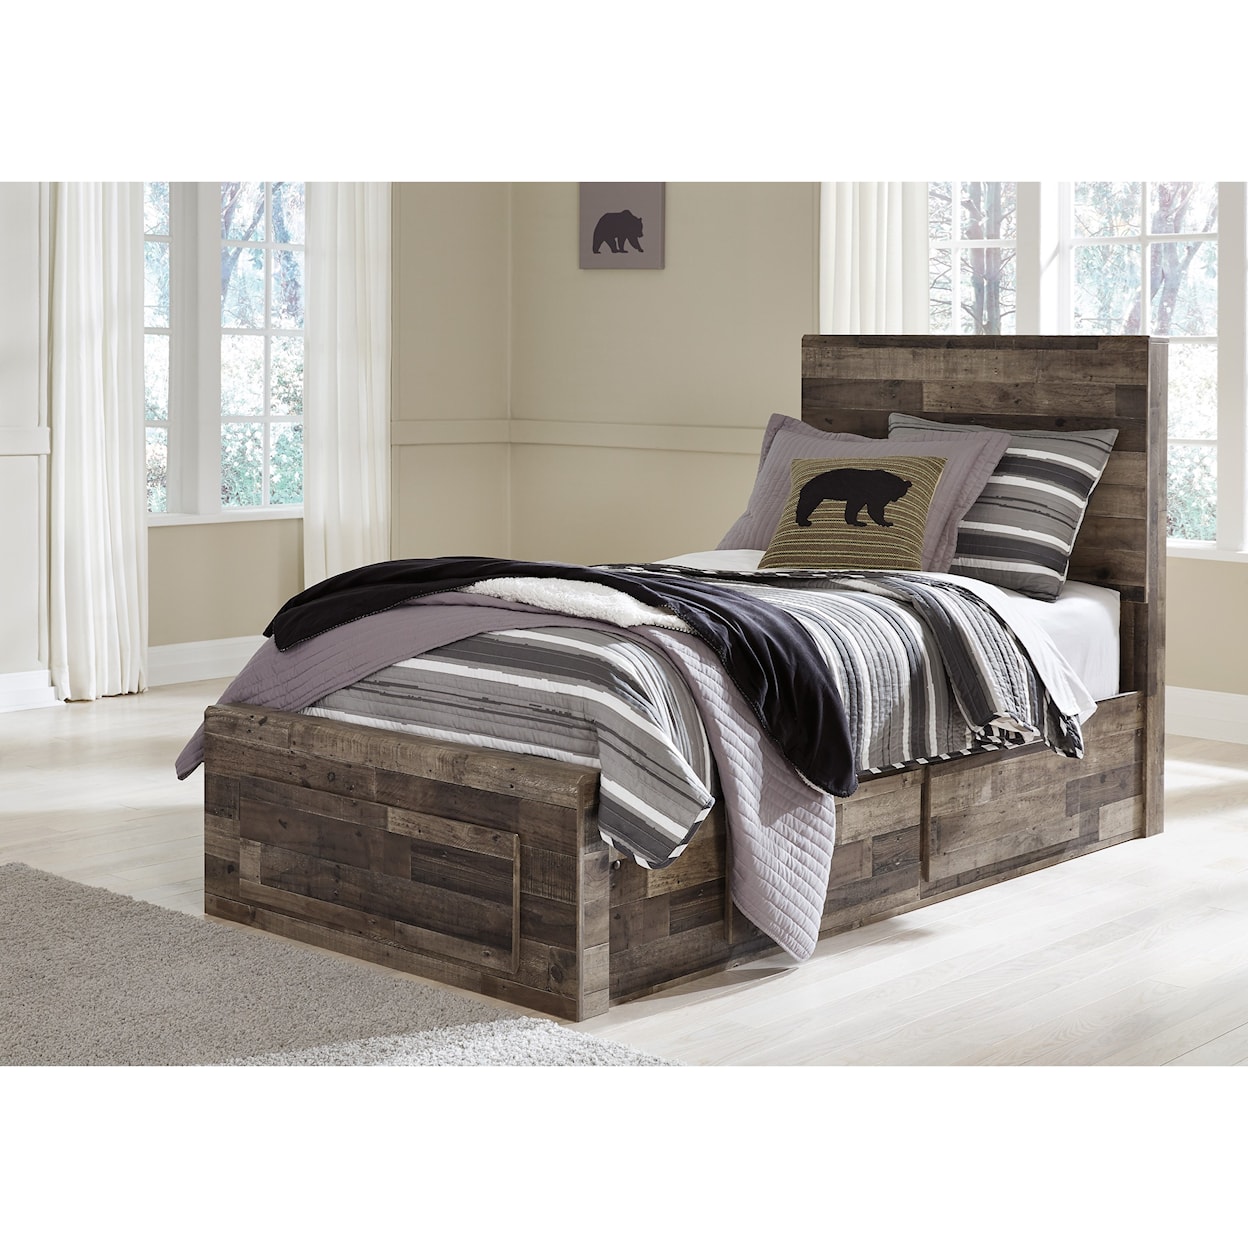 Ashley Furniture Benchcraft Derekson Twin Panel Bed with 2 Storage Drawers